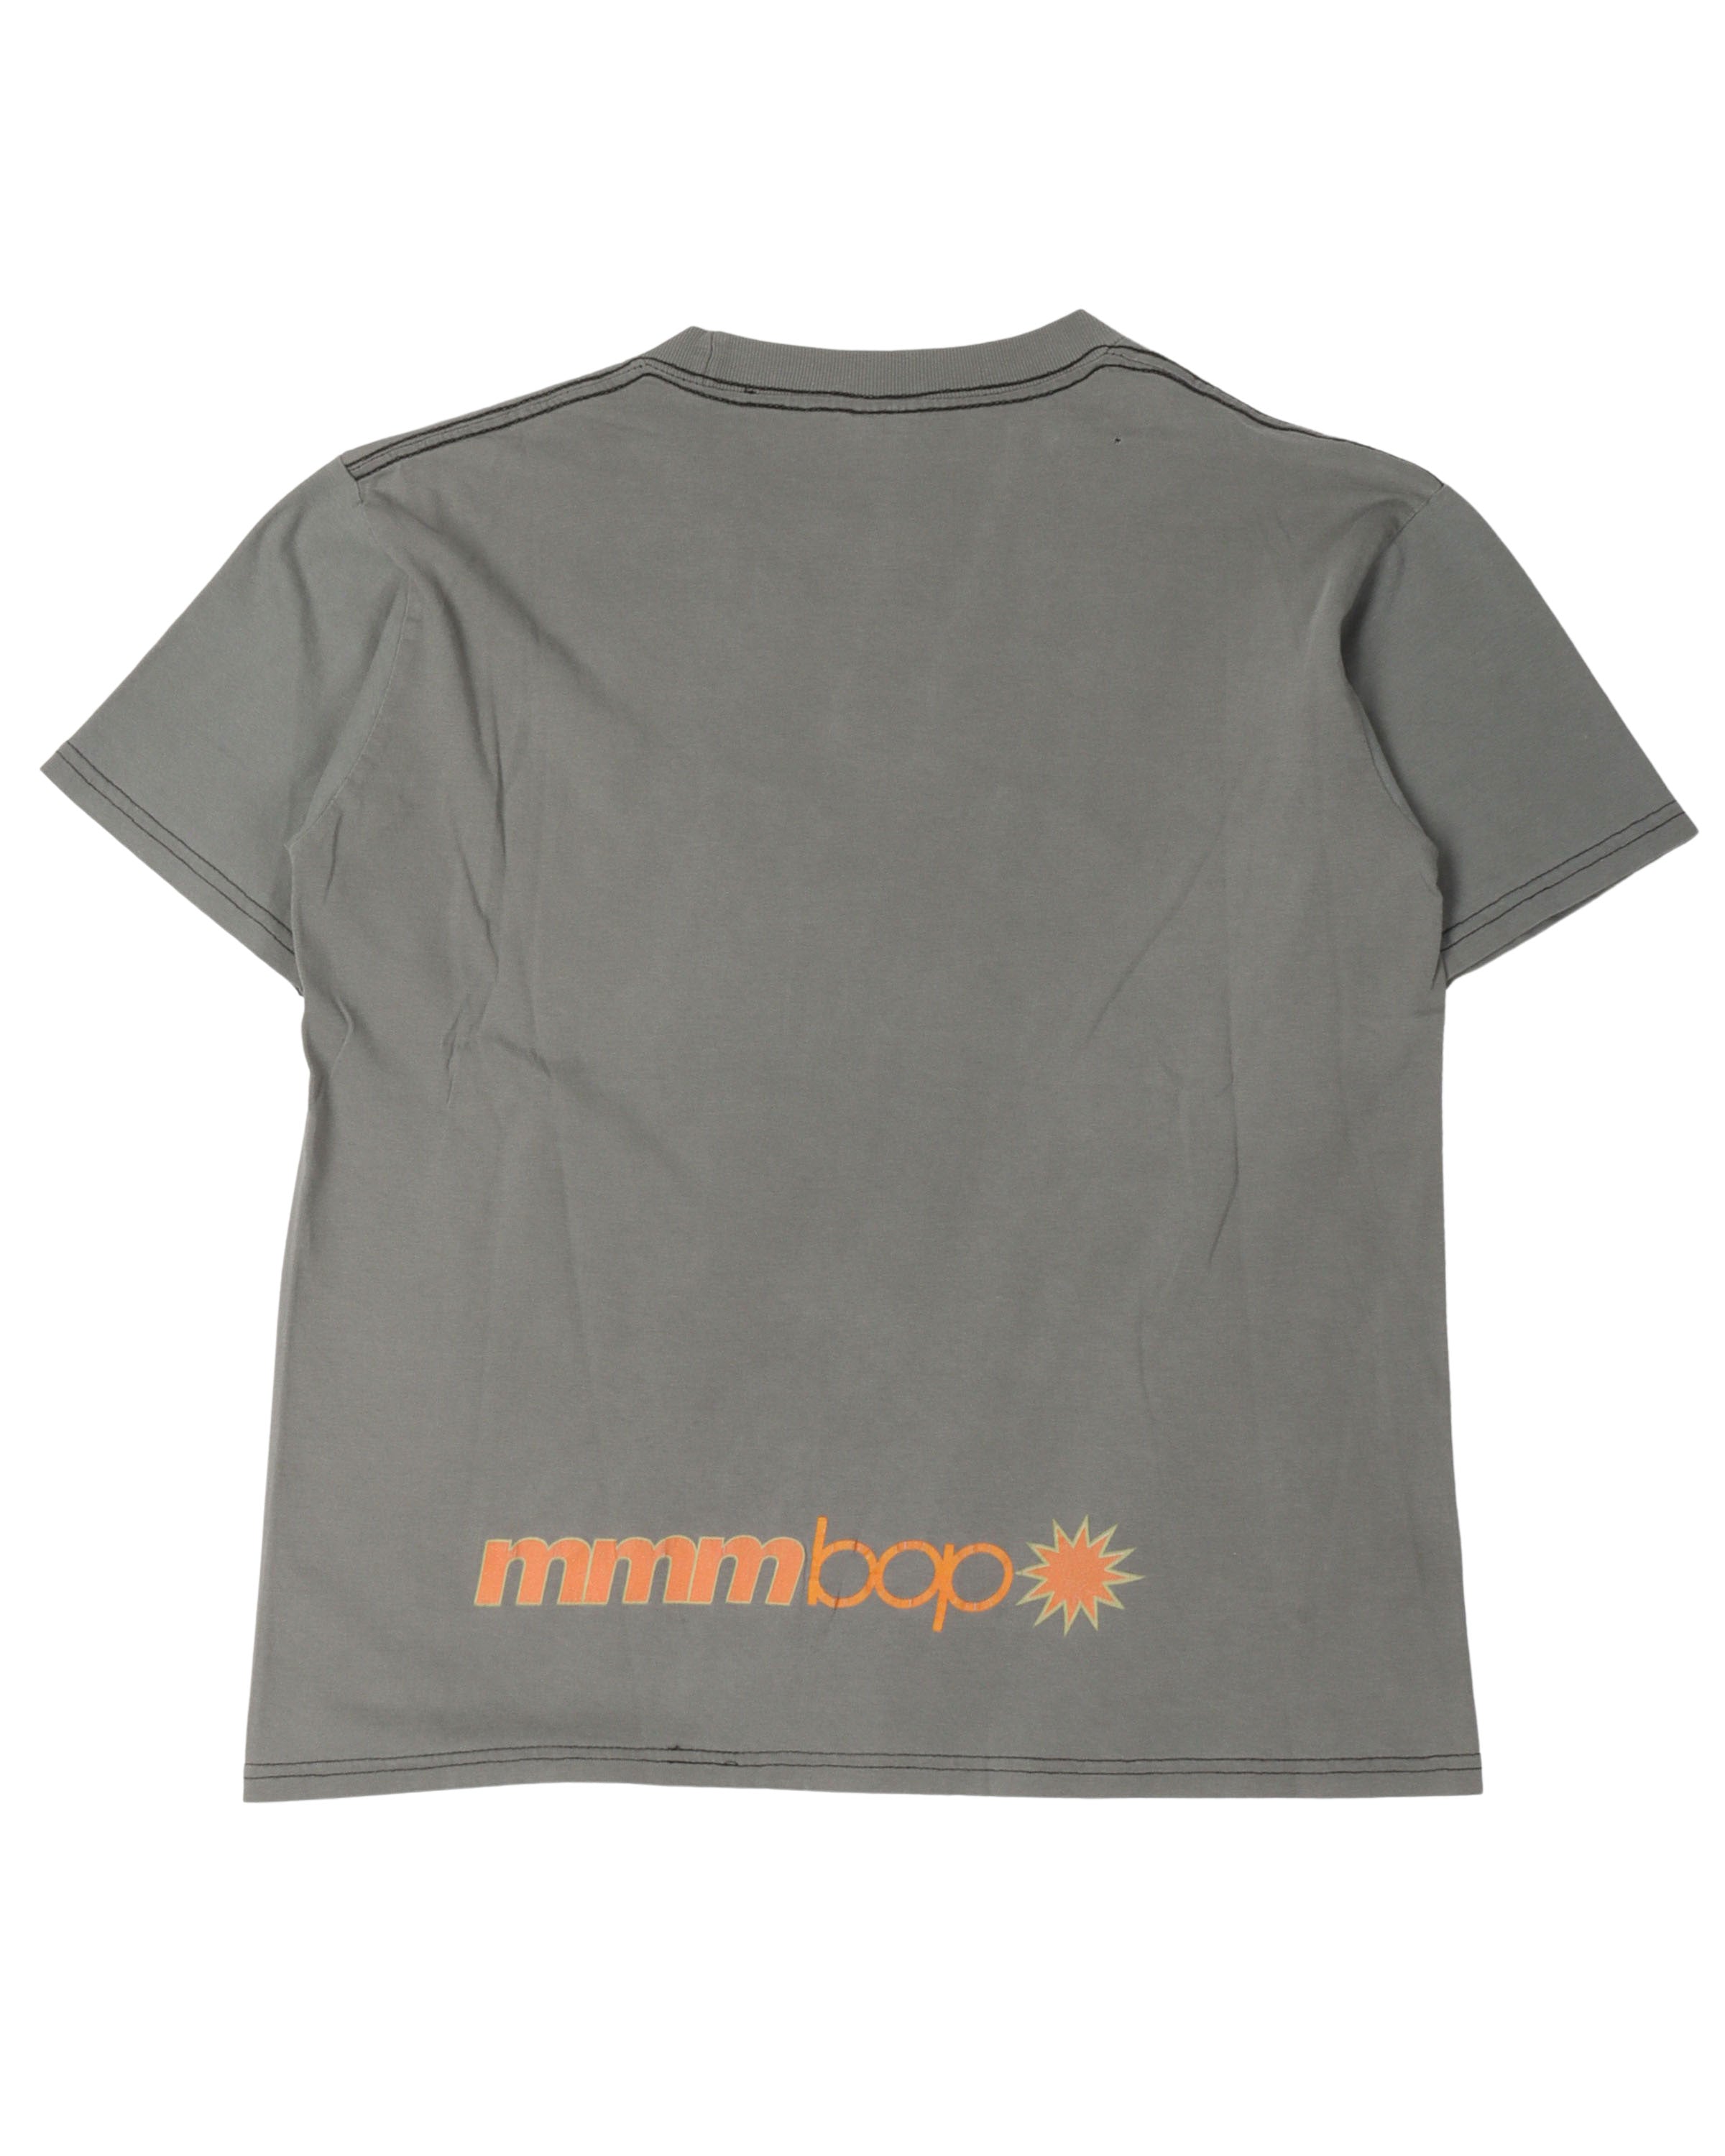 Hanson "mmmbop" T-Shirt